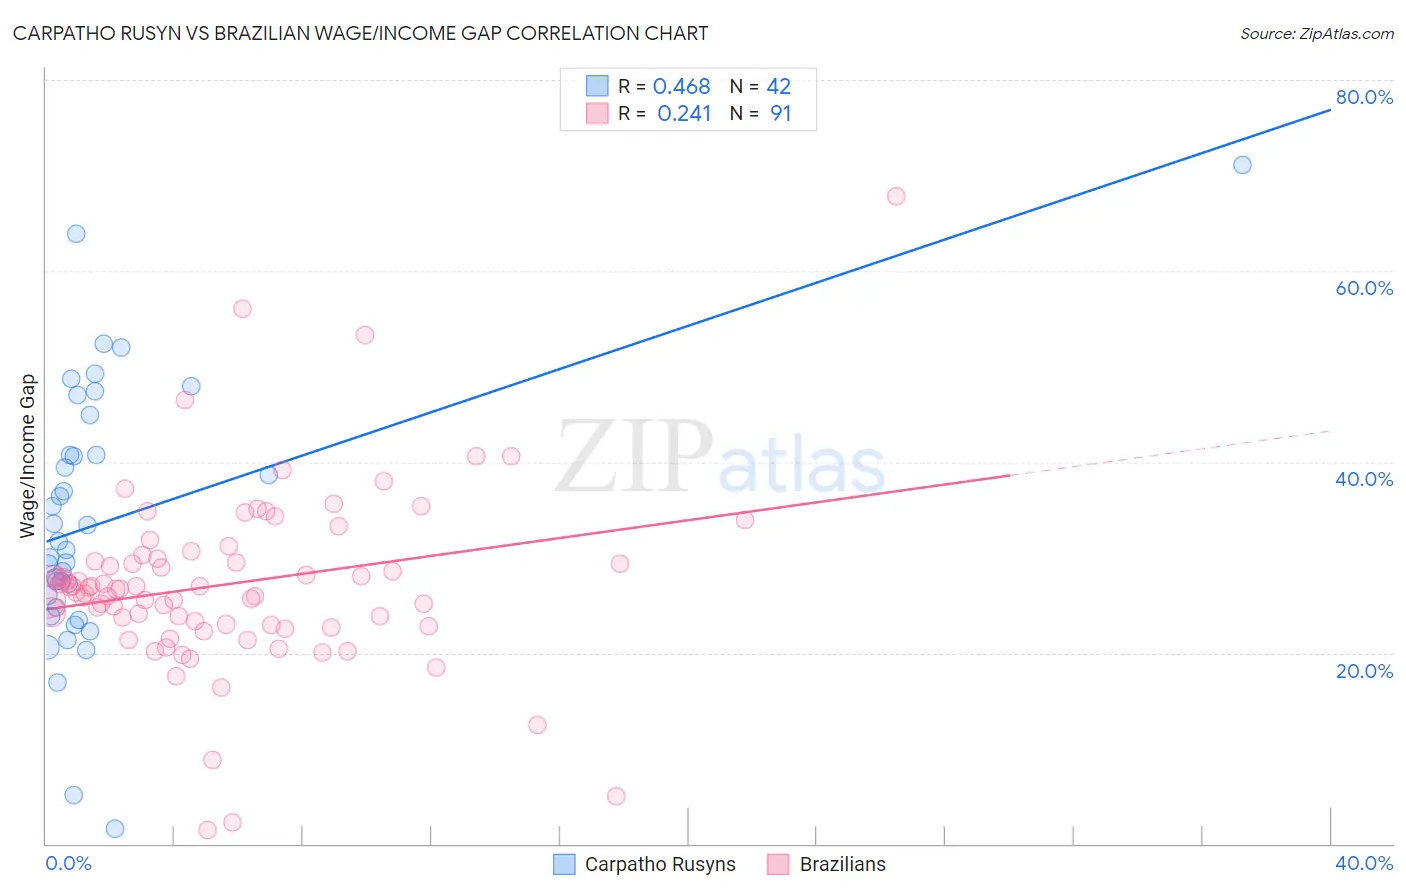 Carpatho Rusyn vs Brazilian Wage/Income Gap